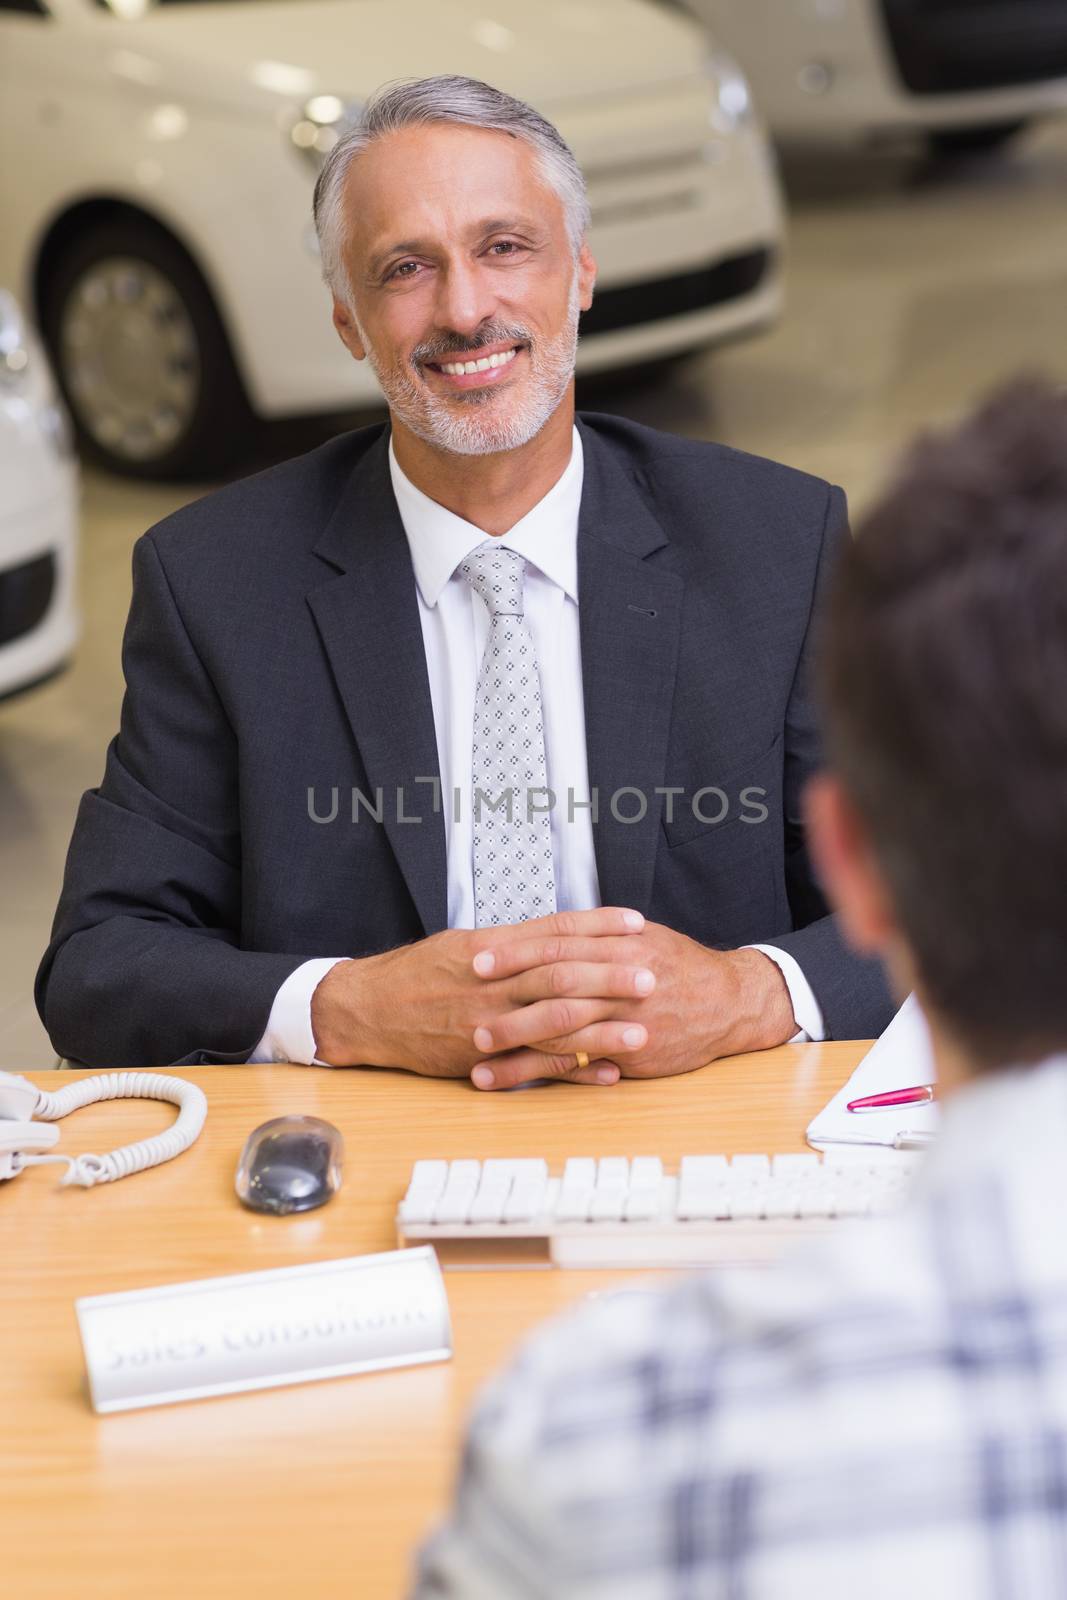 Smiling businessman looking at camera at new car showroom